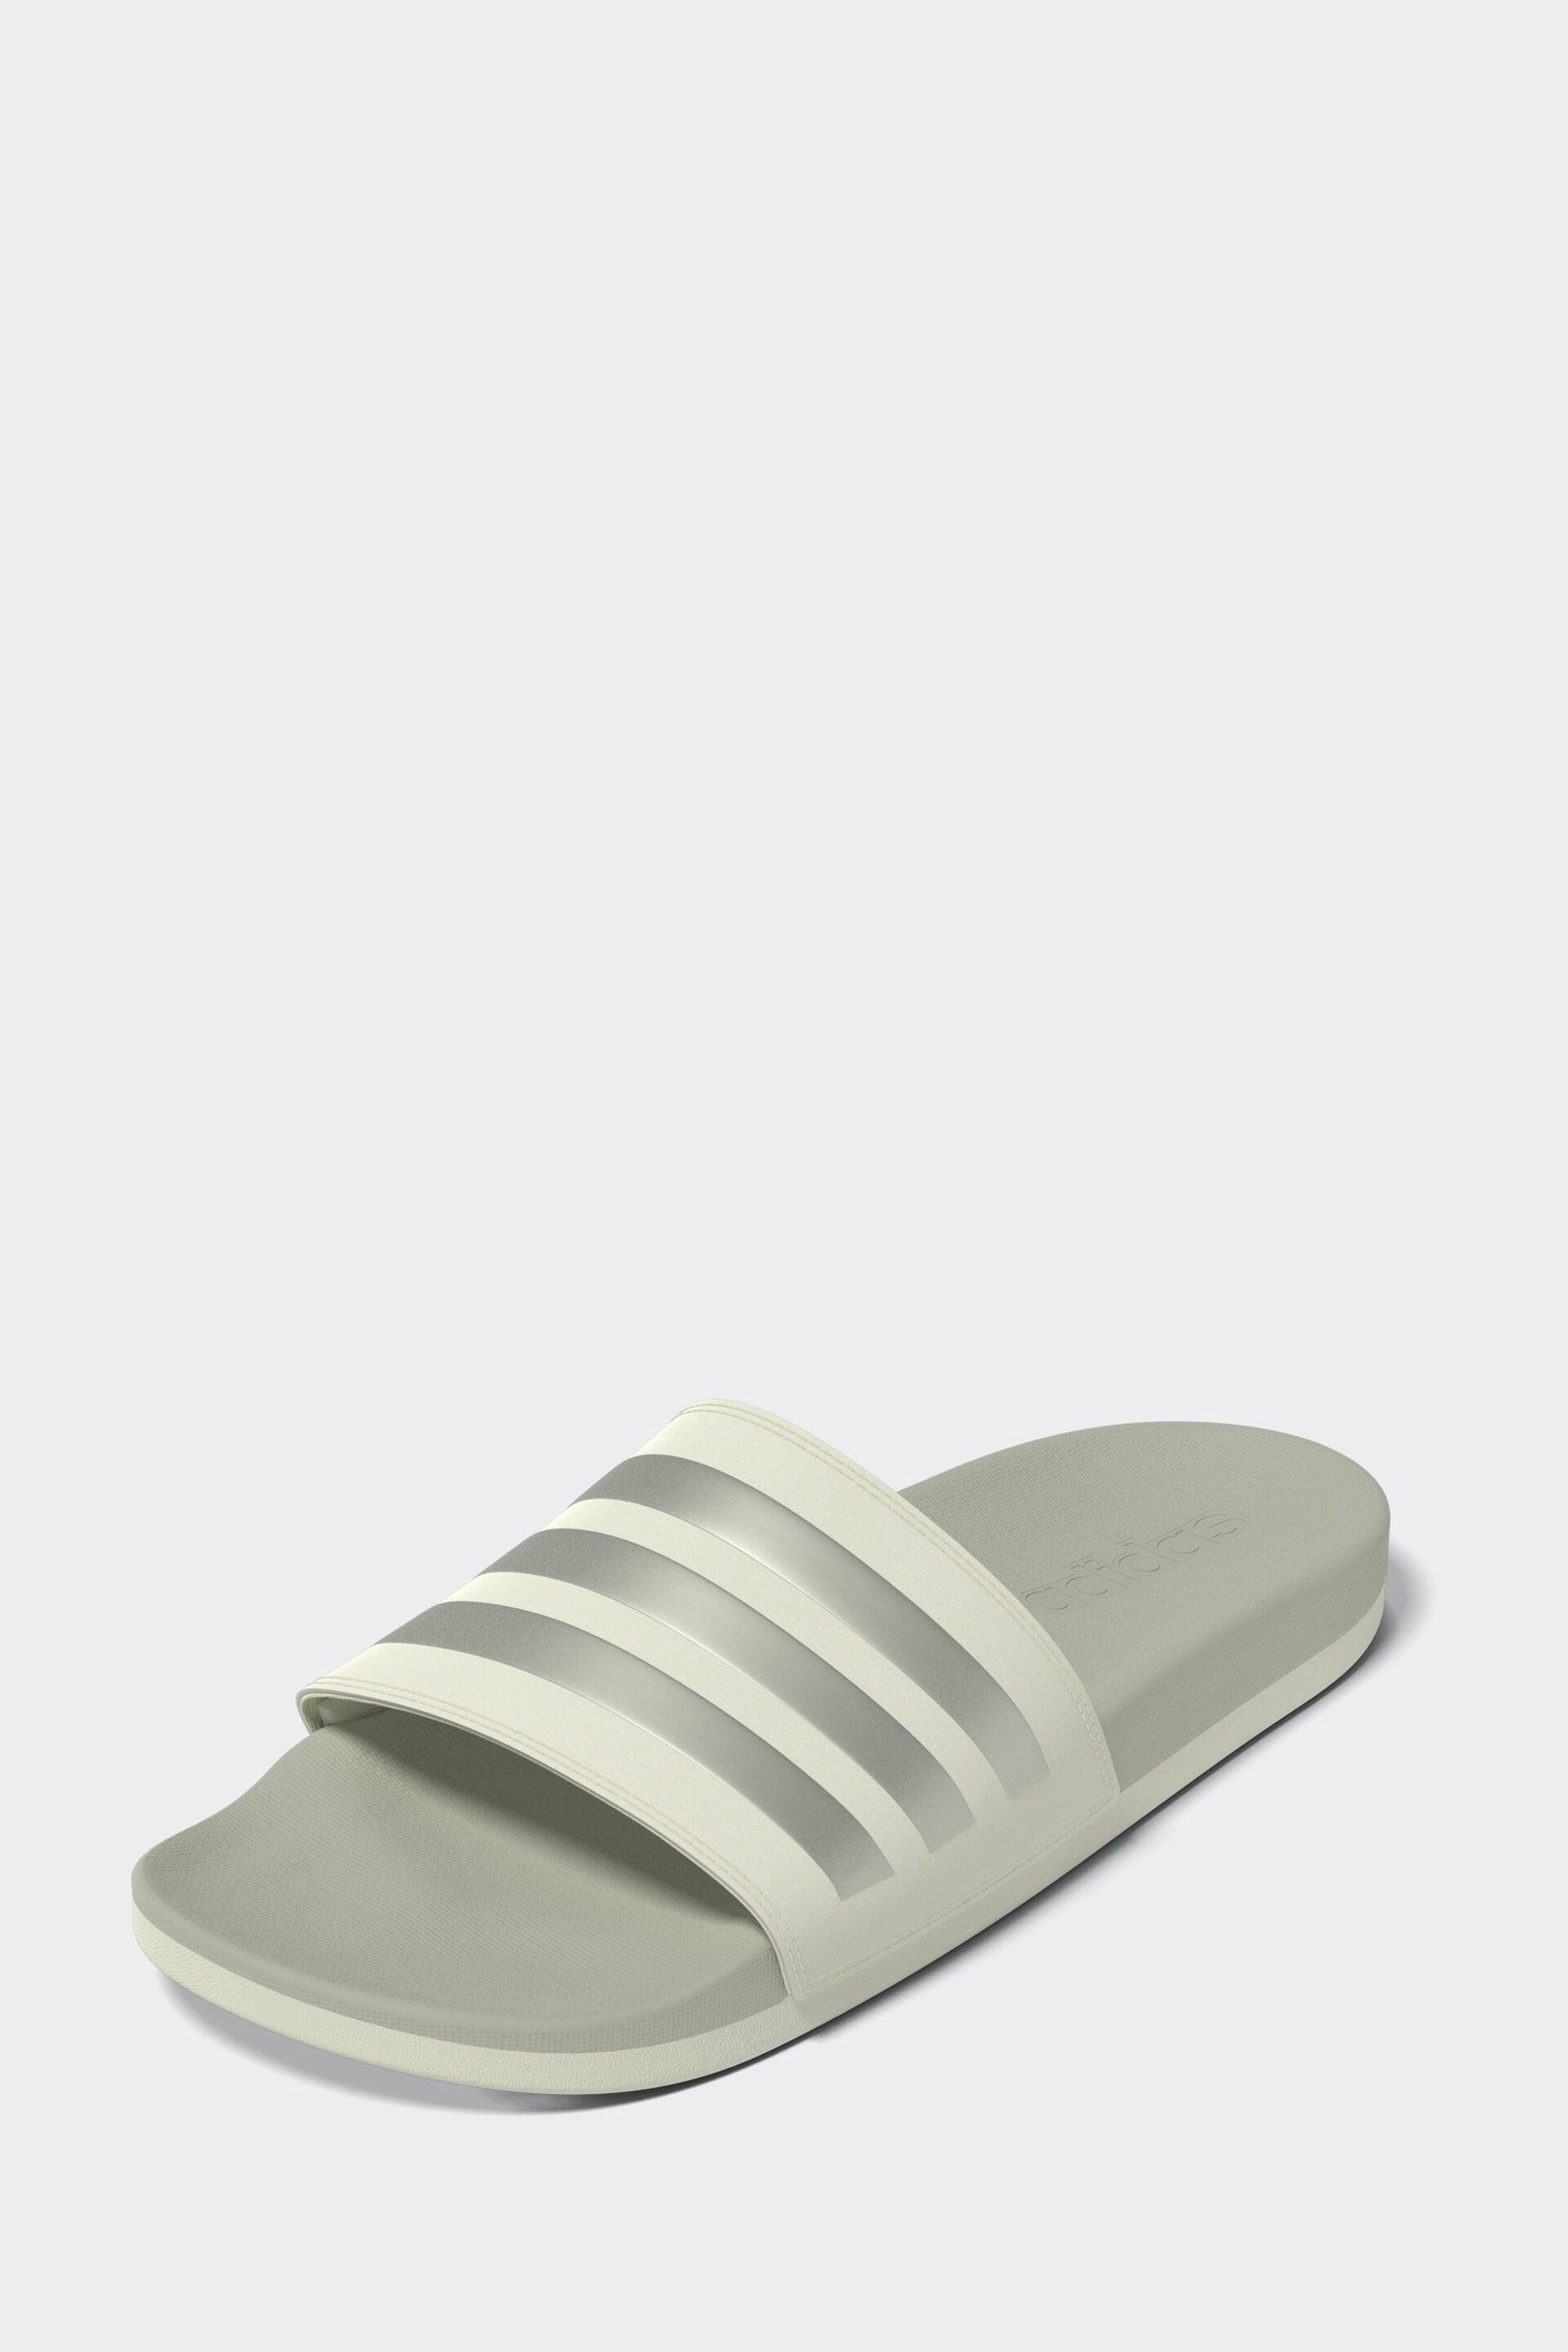 adidas Green Adult Sportswear Adilette Comfort Slides - Image 5 of 10